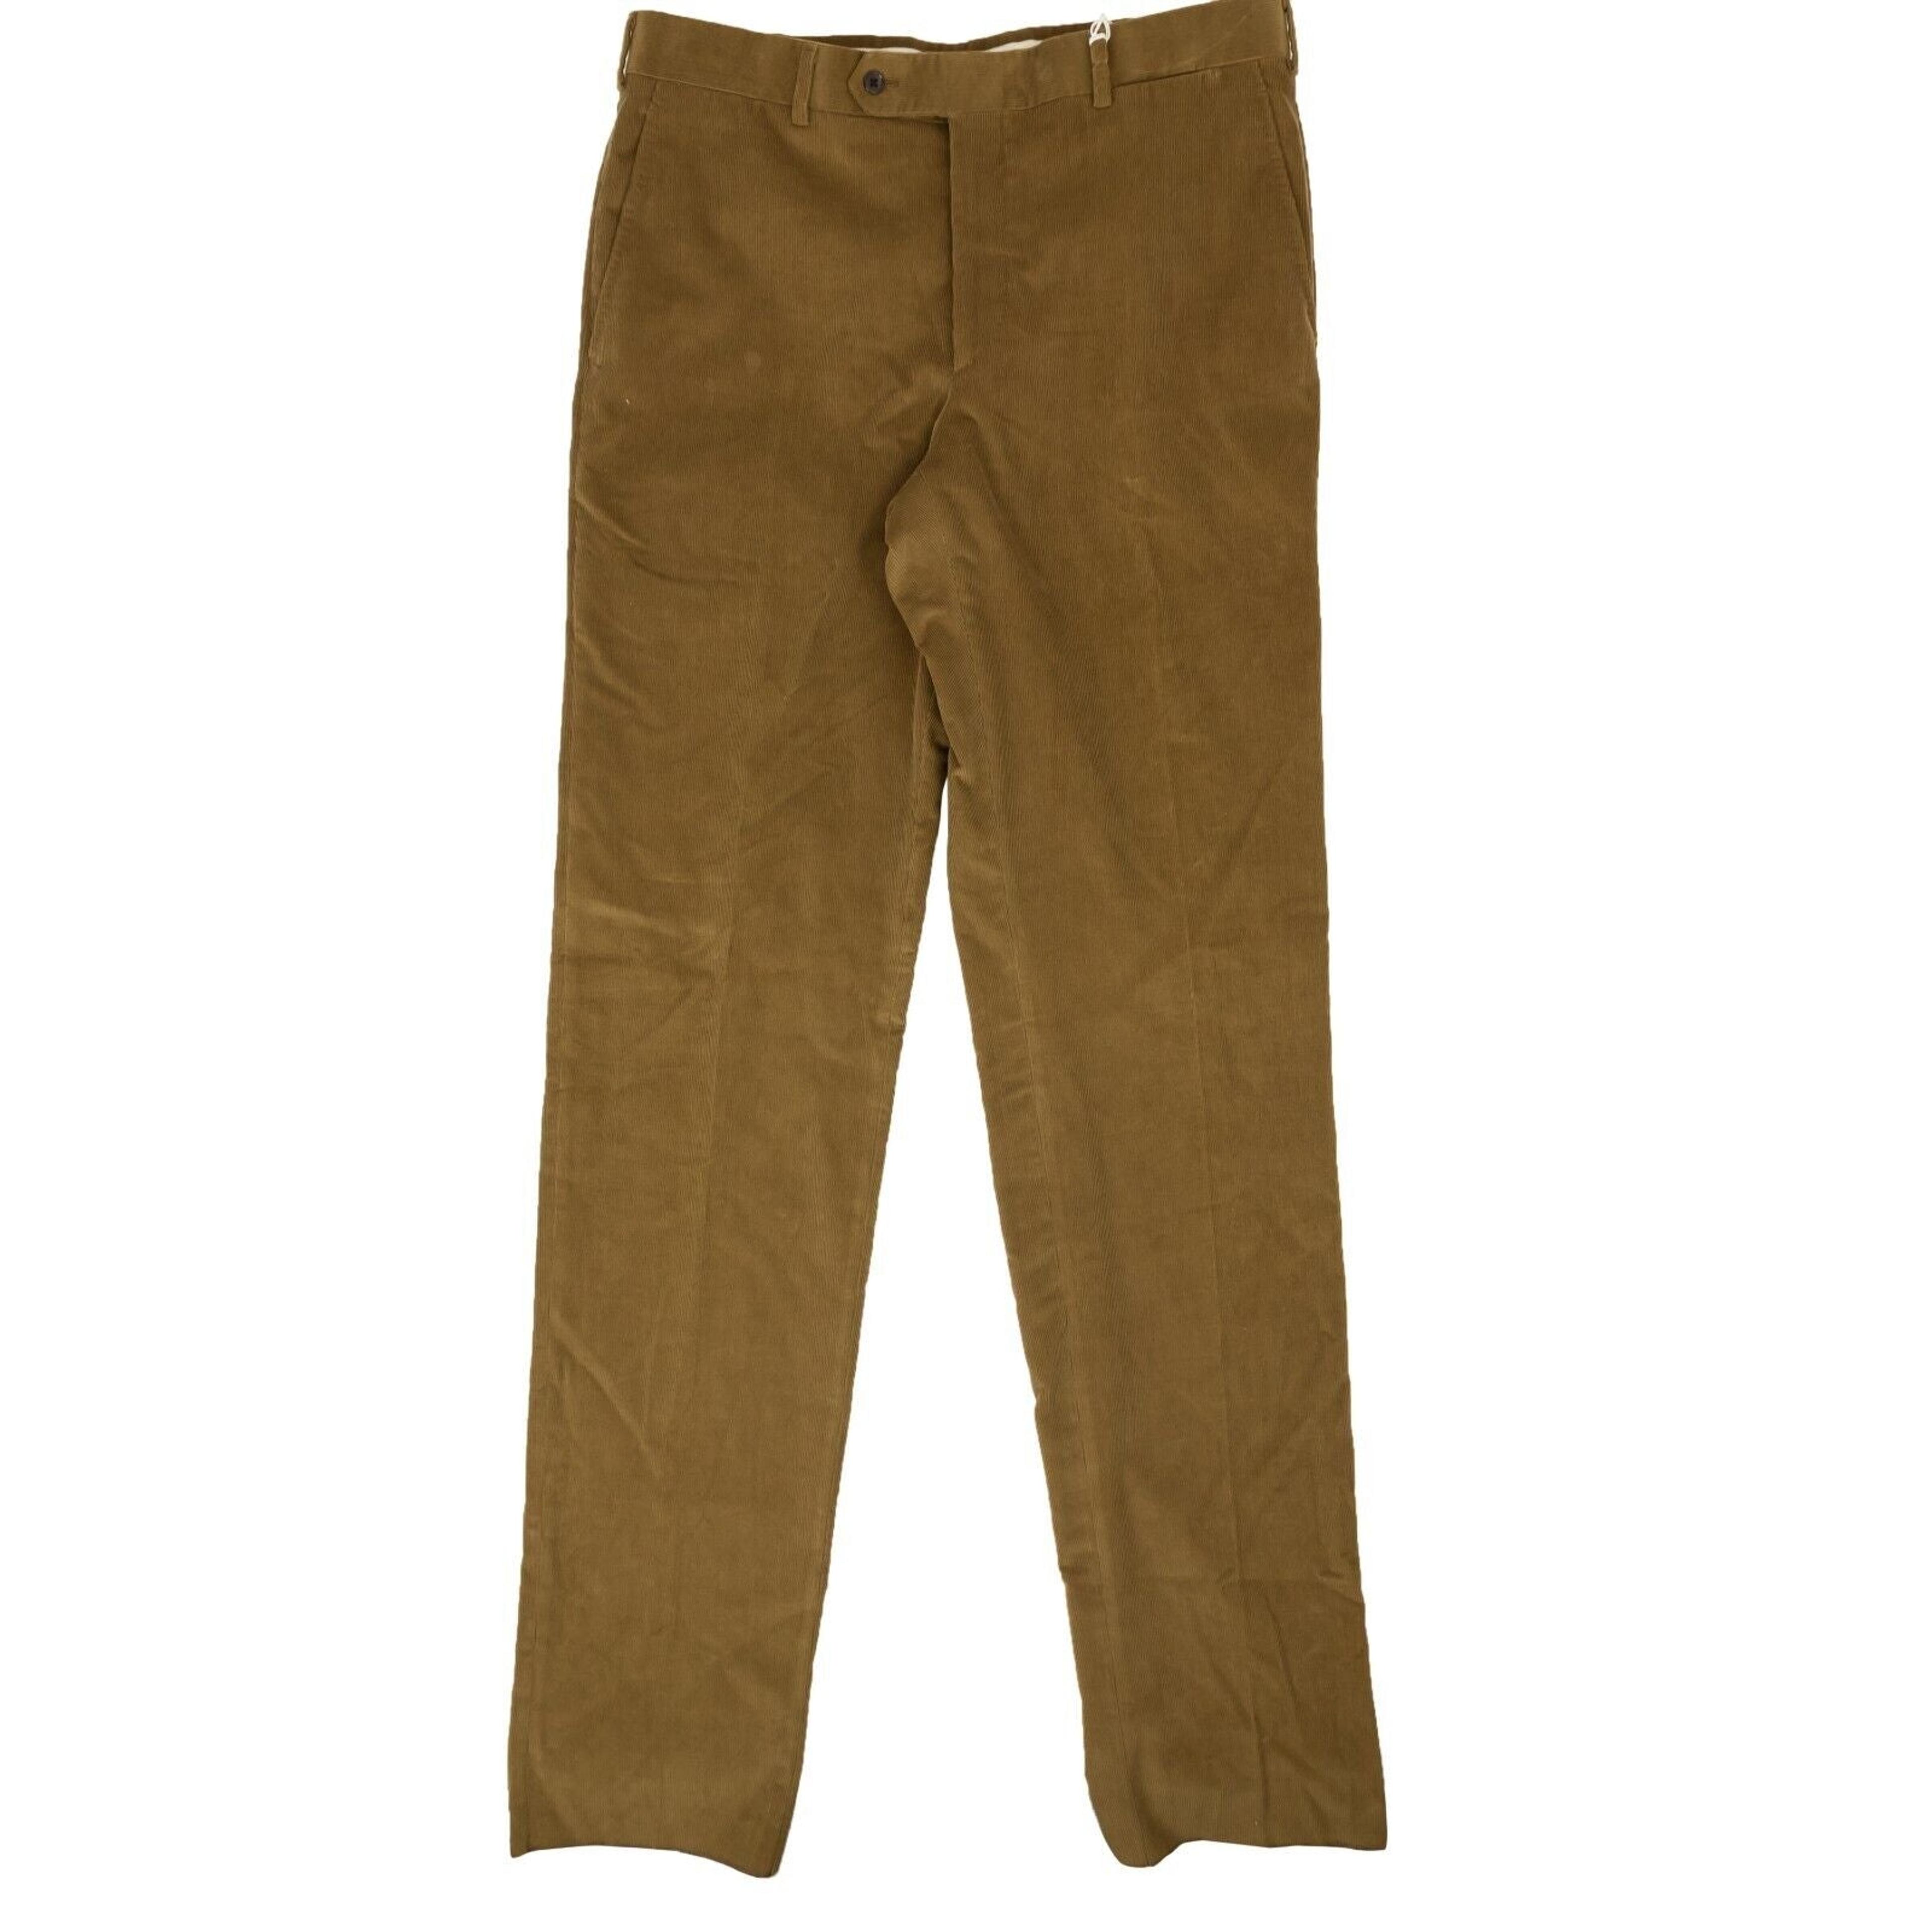 Alternate View 1 of Belvest Brown Cotton Blend Corduroy Casual Pants